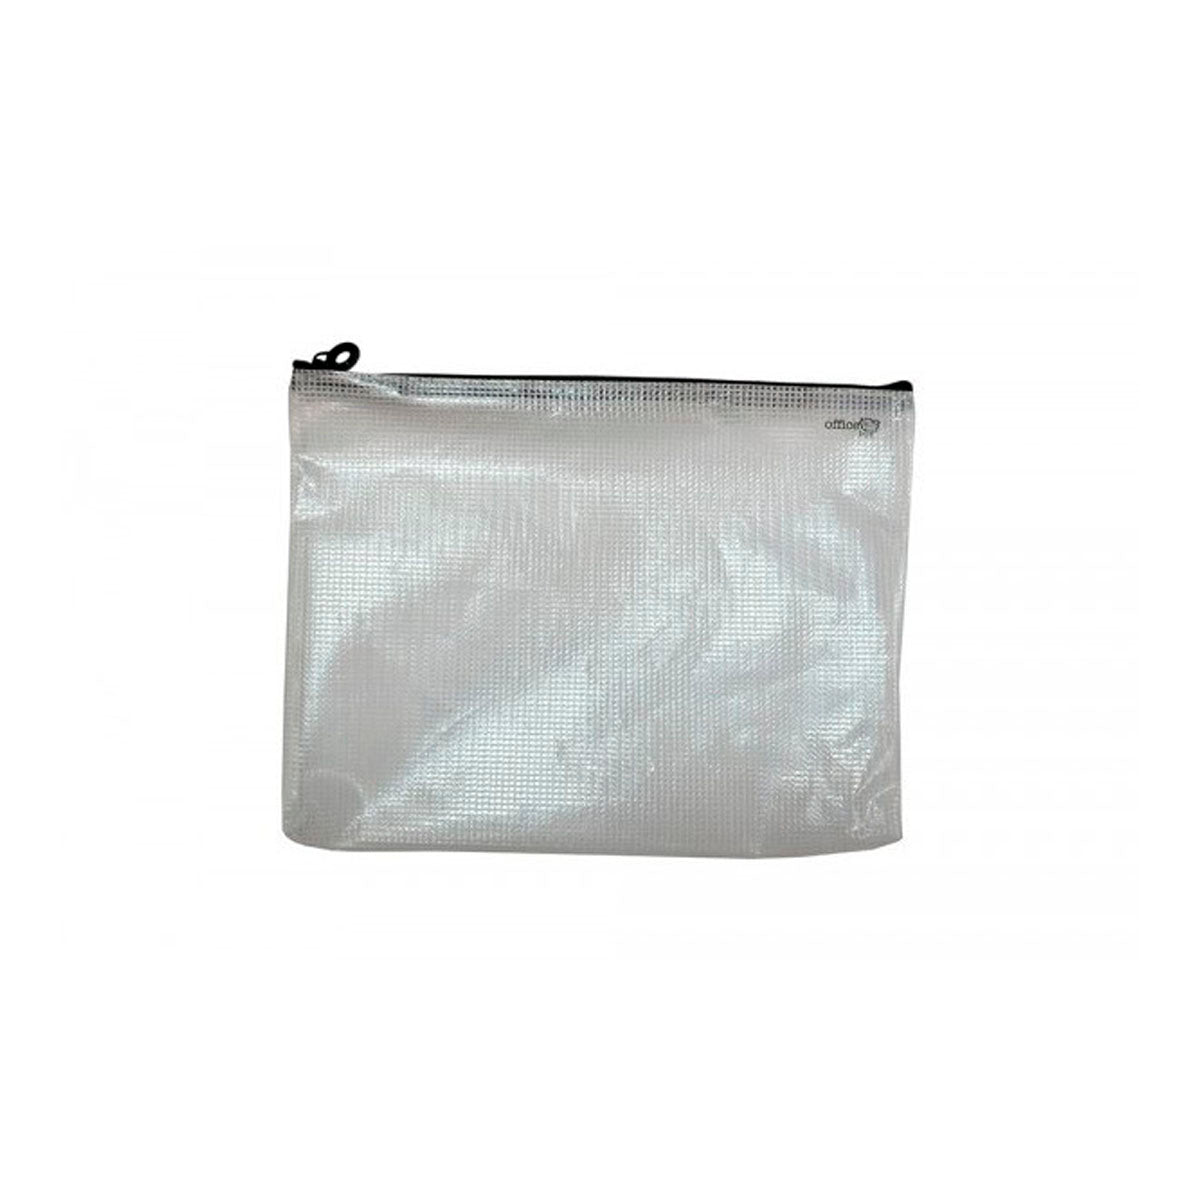 Office Box - Bolsa Multiusos Multi Bag B5 Transparente con Cierre de Cremallera